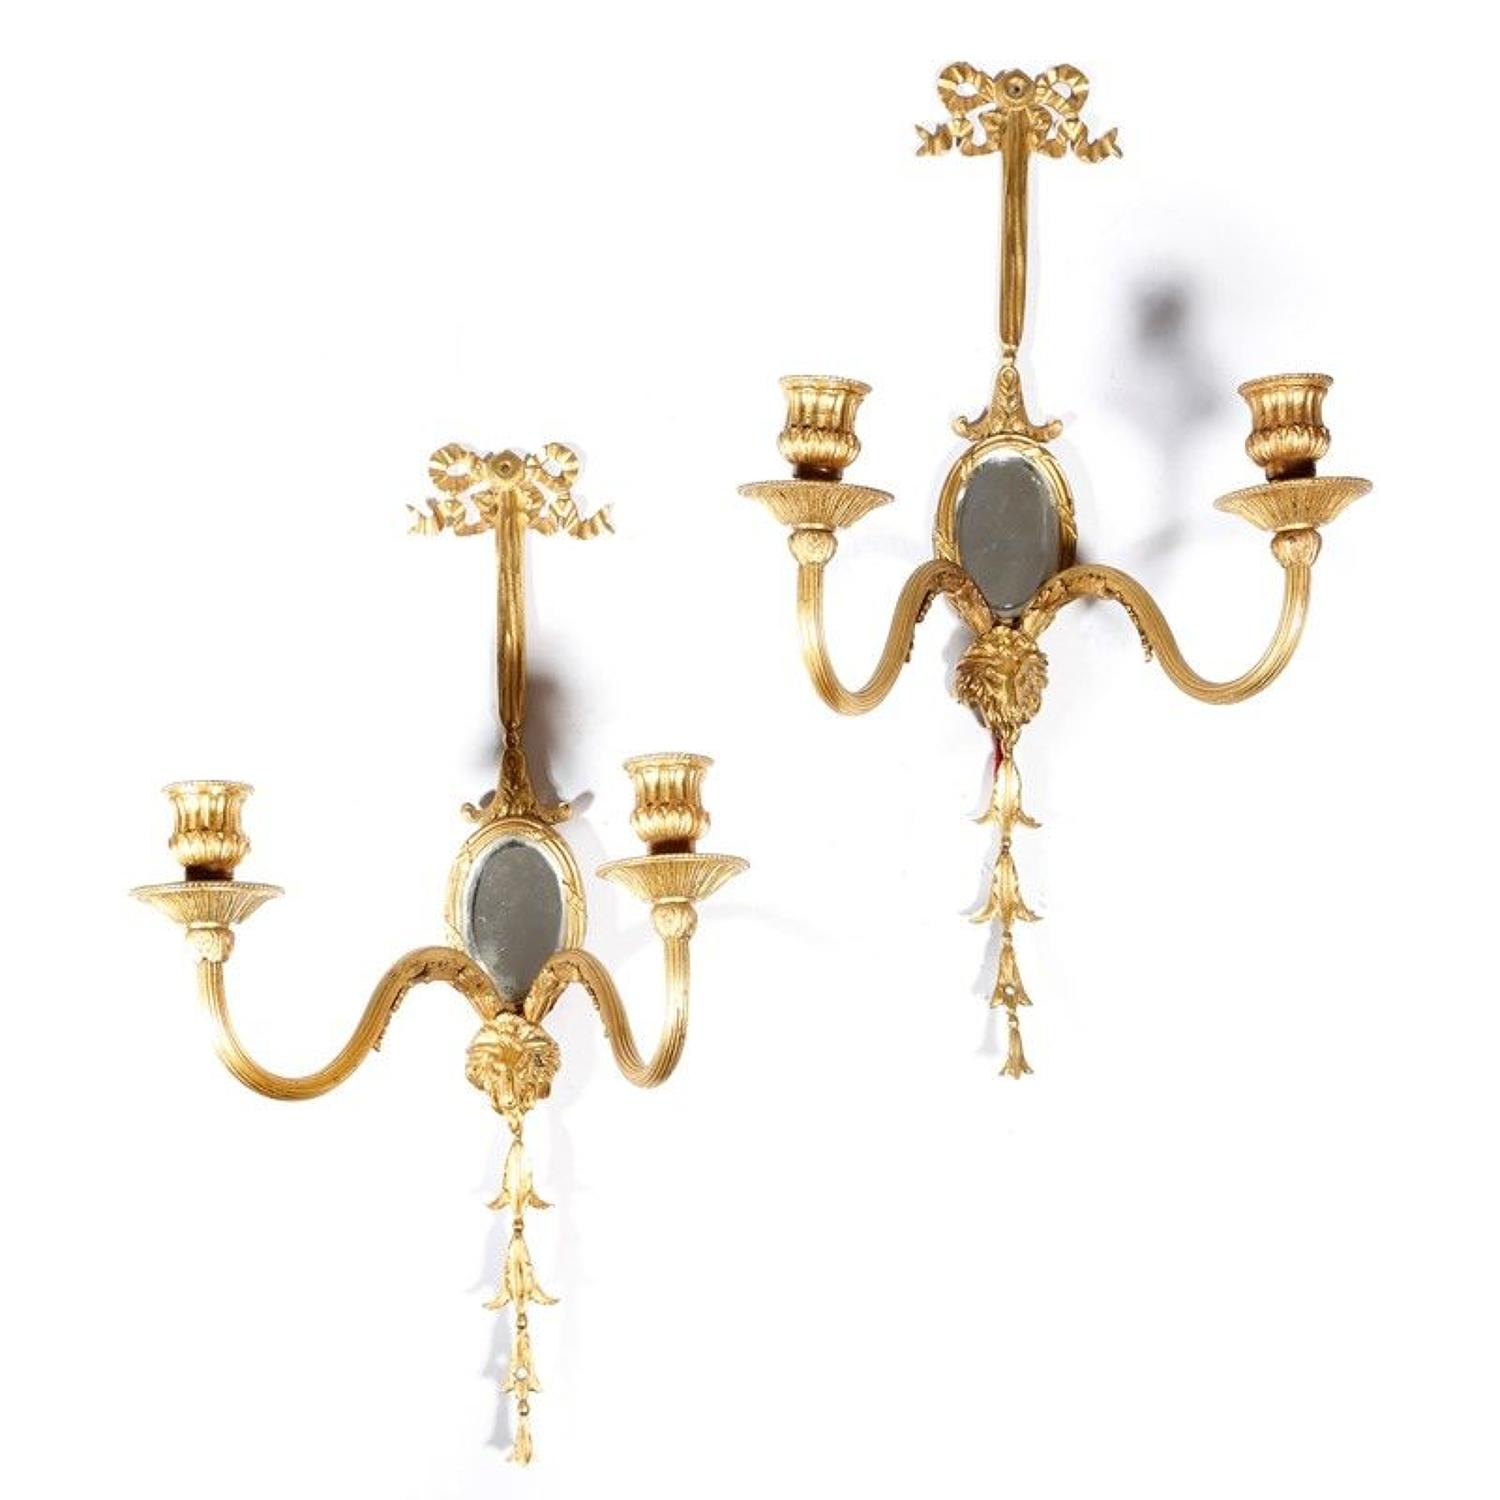 A pair of Ormolu Louis XVI style wall lights